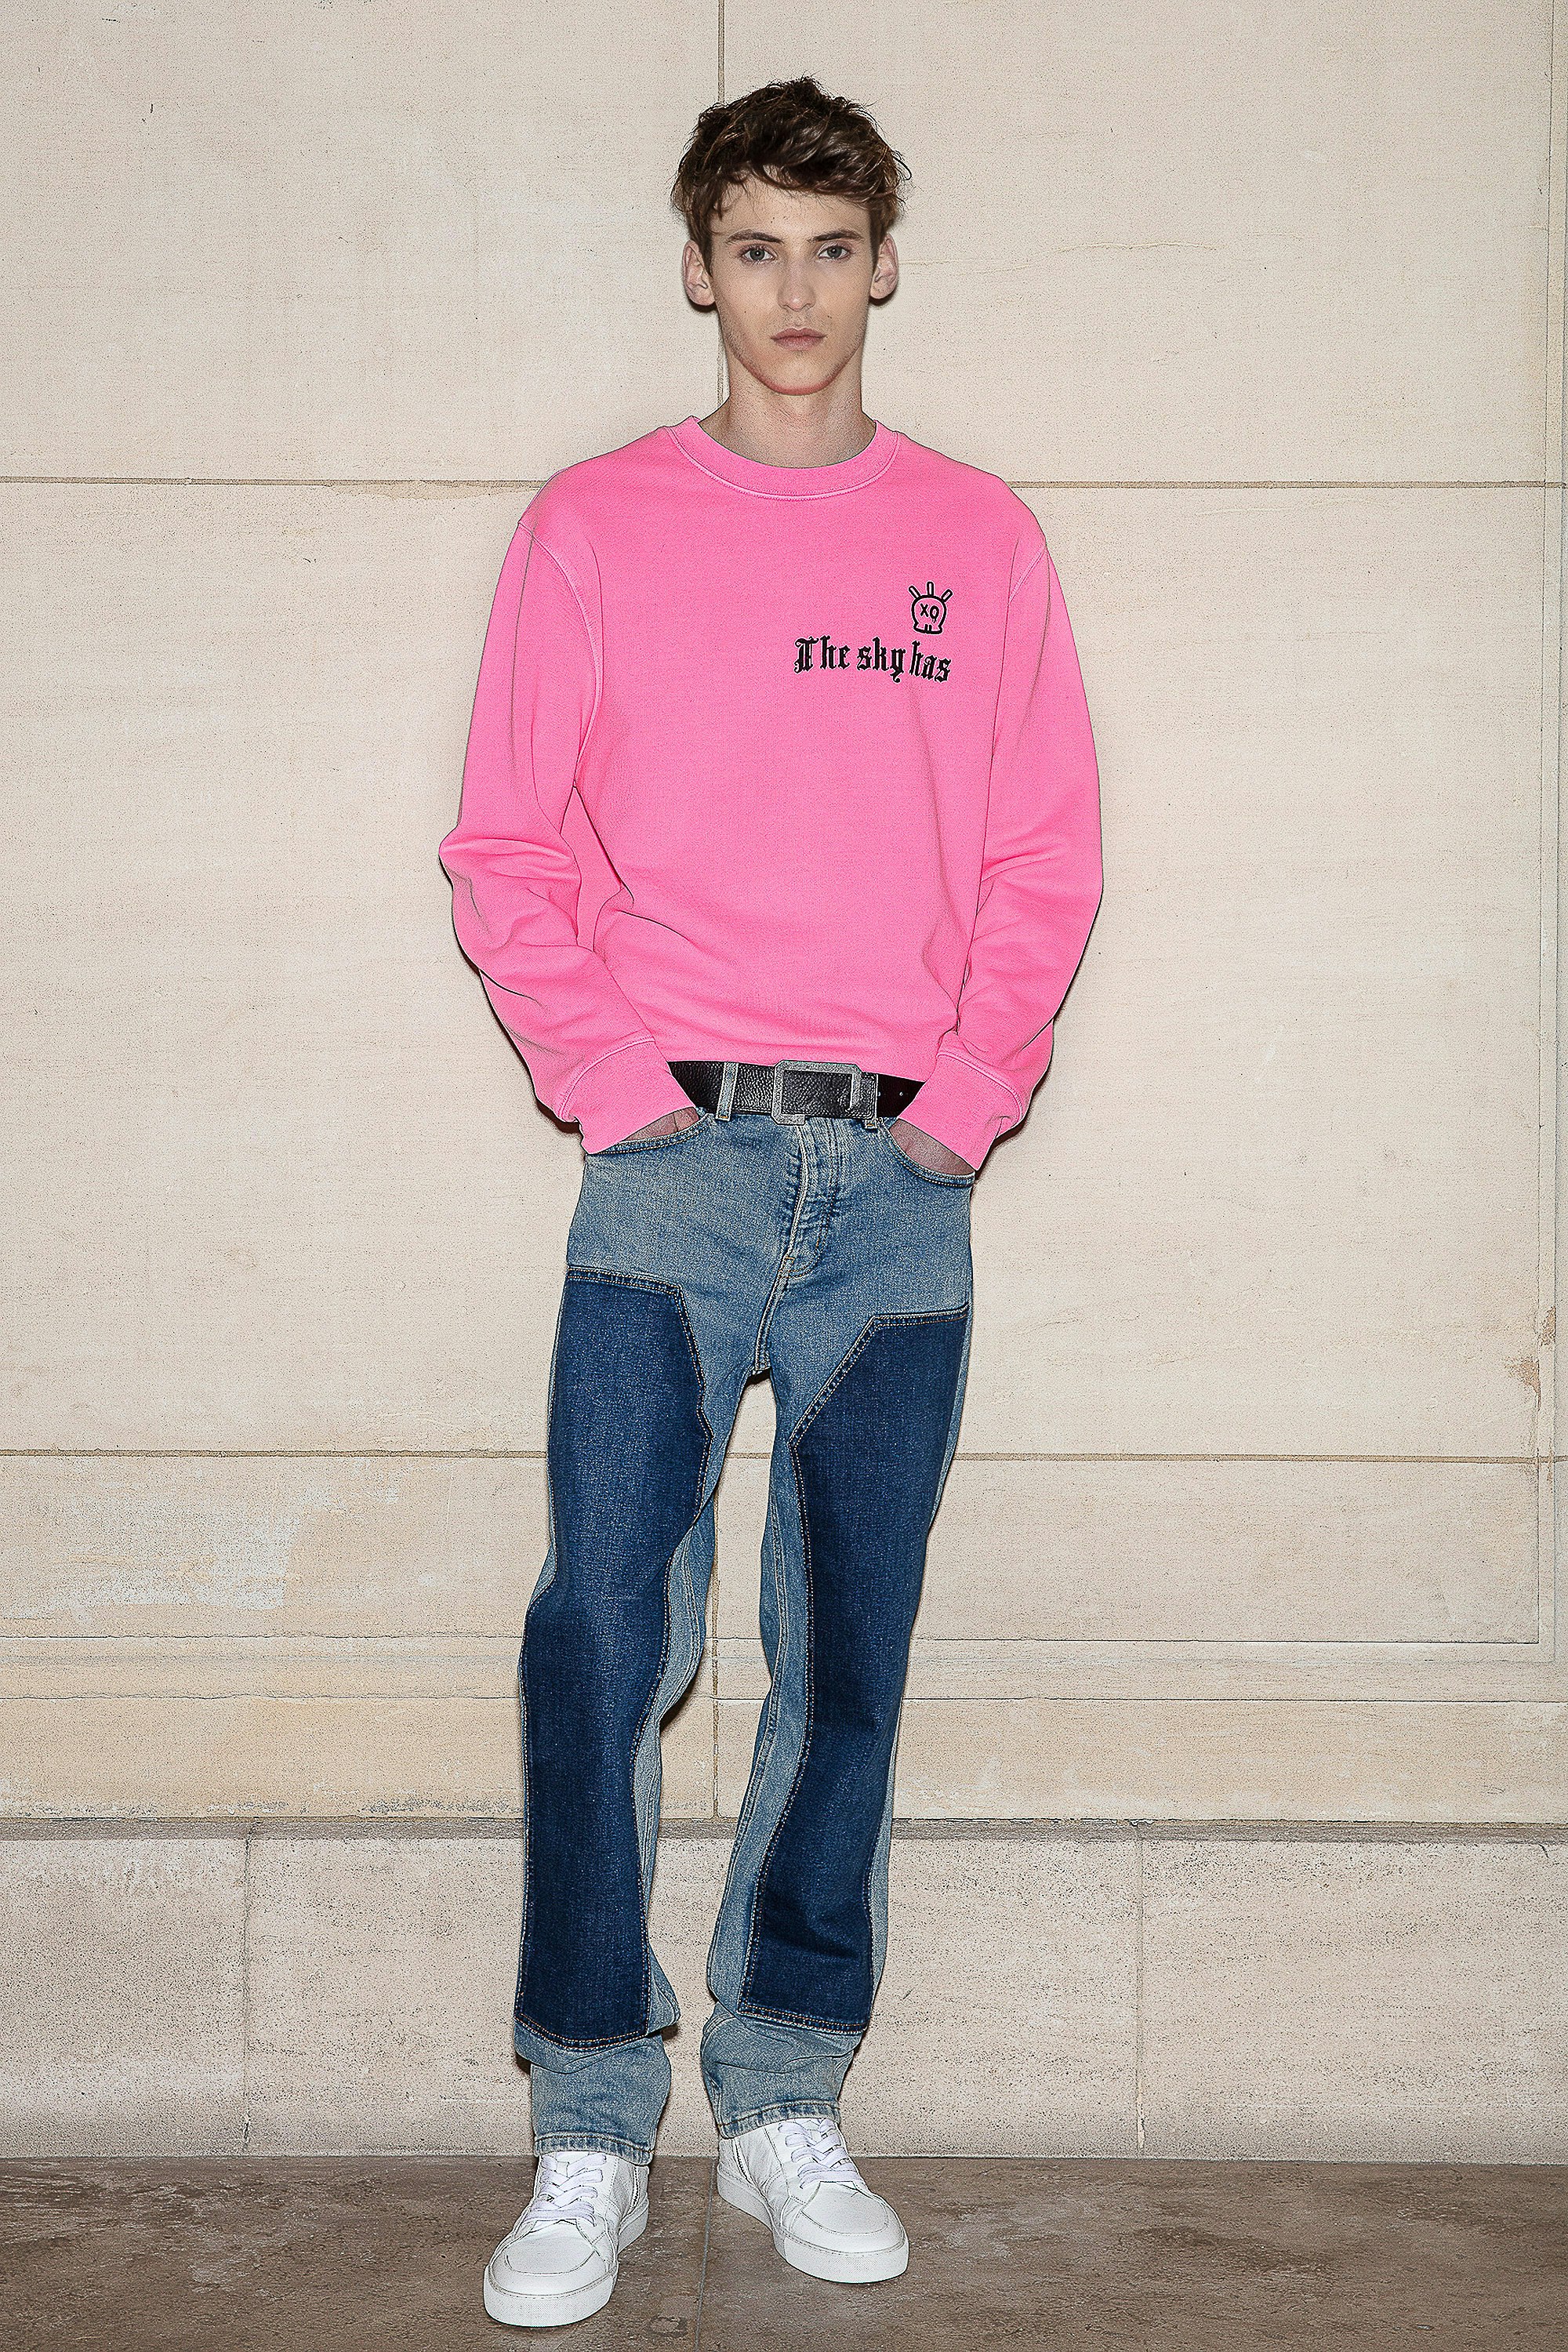 Simba Mo Sweatshirt Men's pink jumper